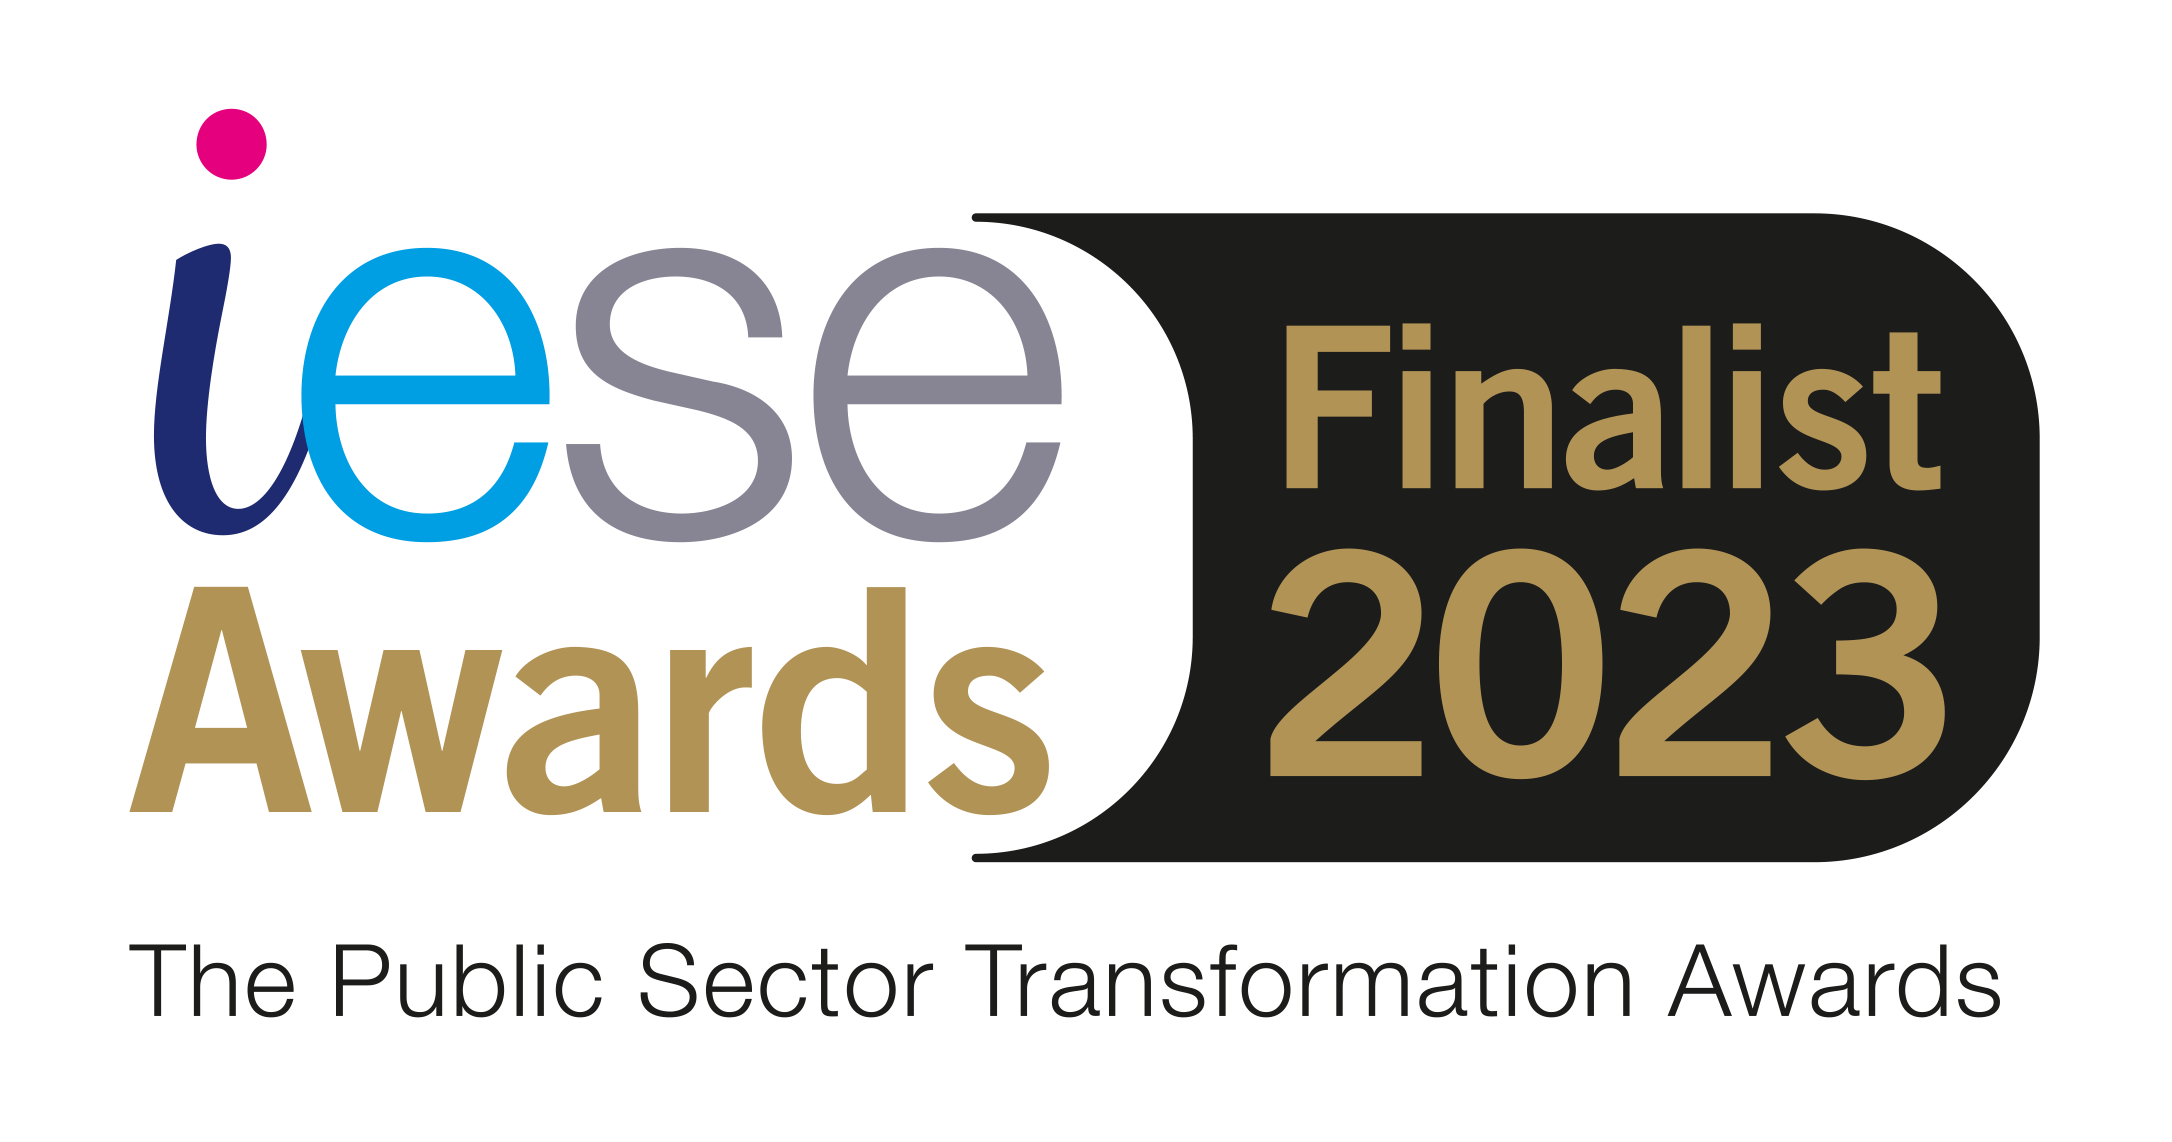 The iESE Awards 2023 logo